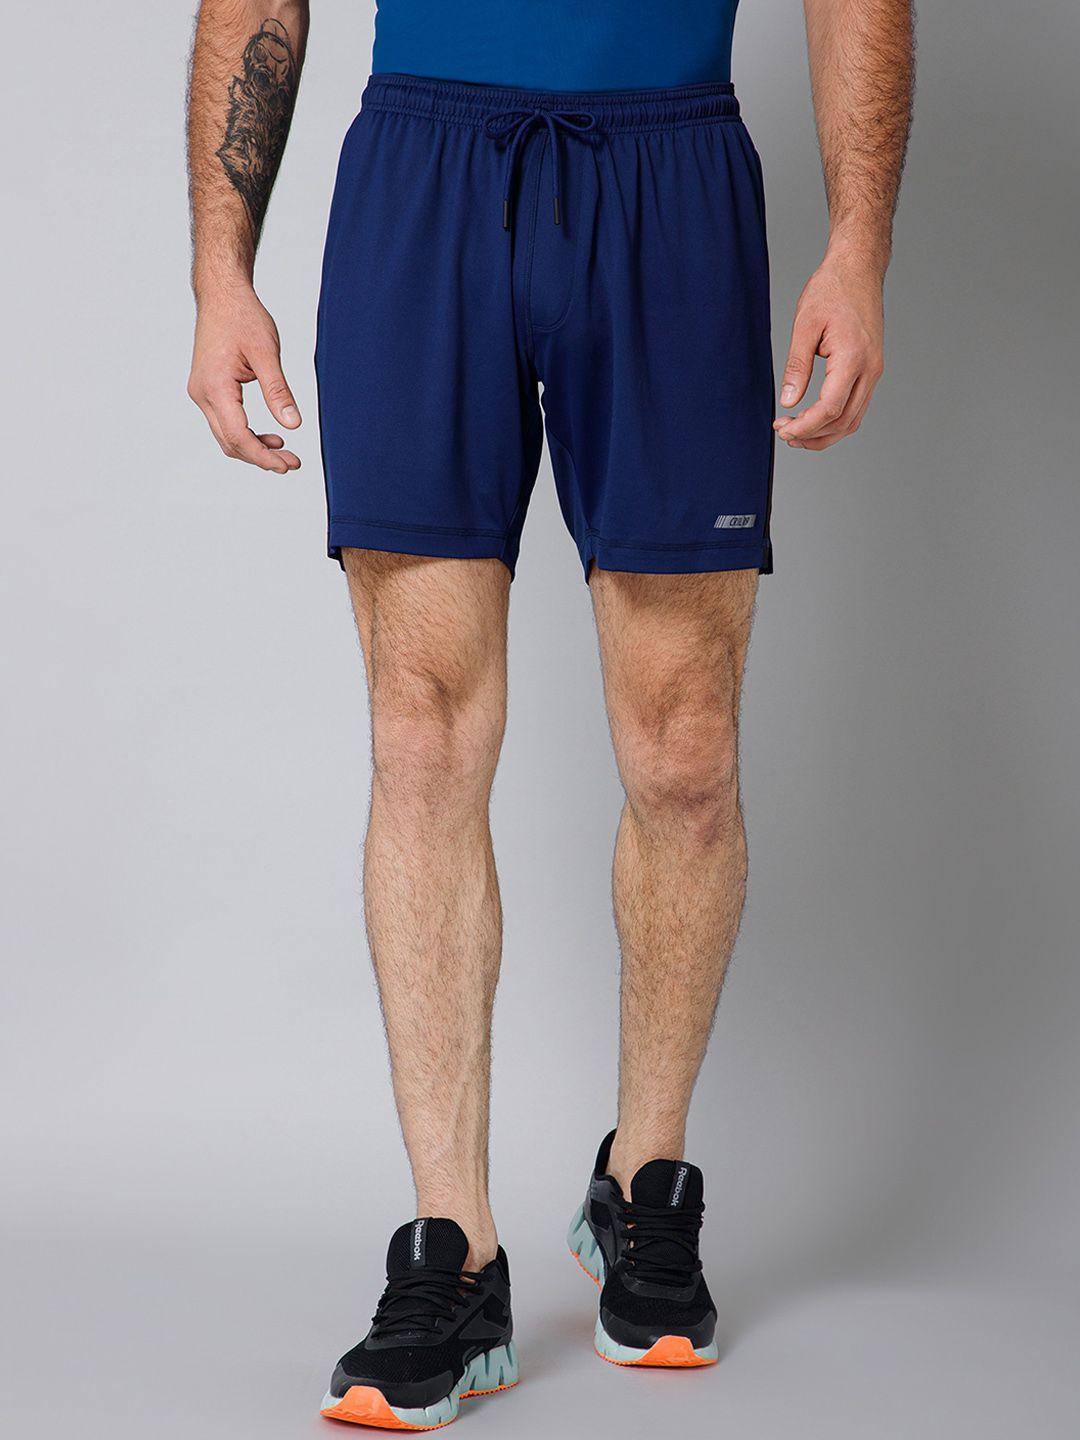 cantabil men mid rise sports shorts